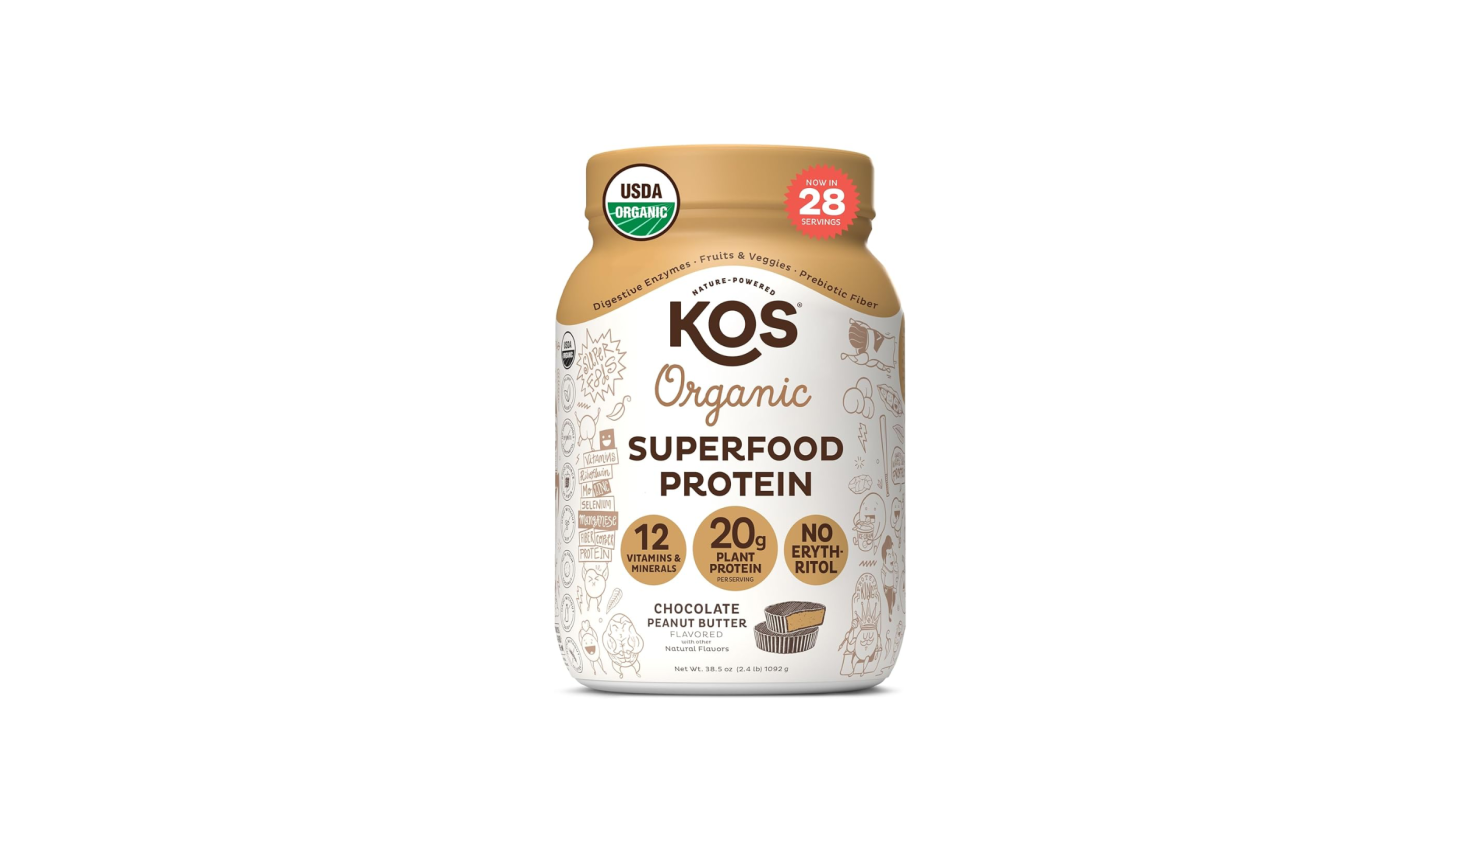 KOS Vegan Protein Powder